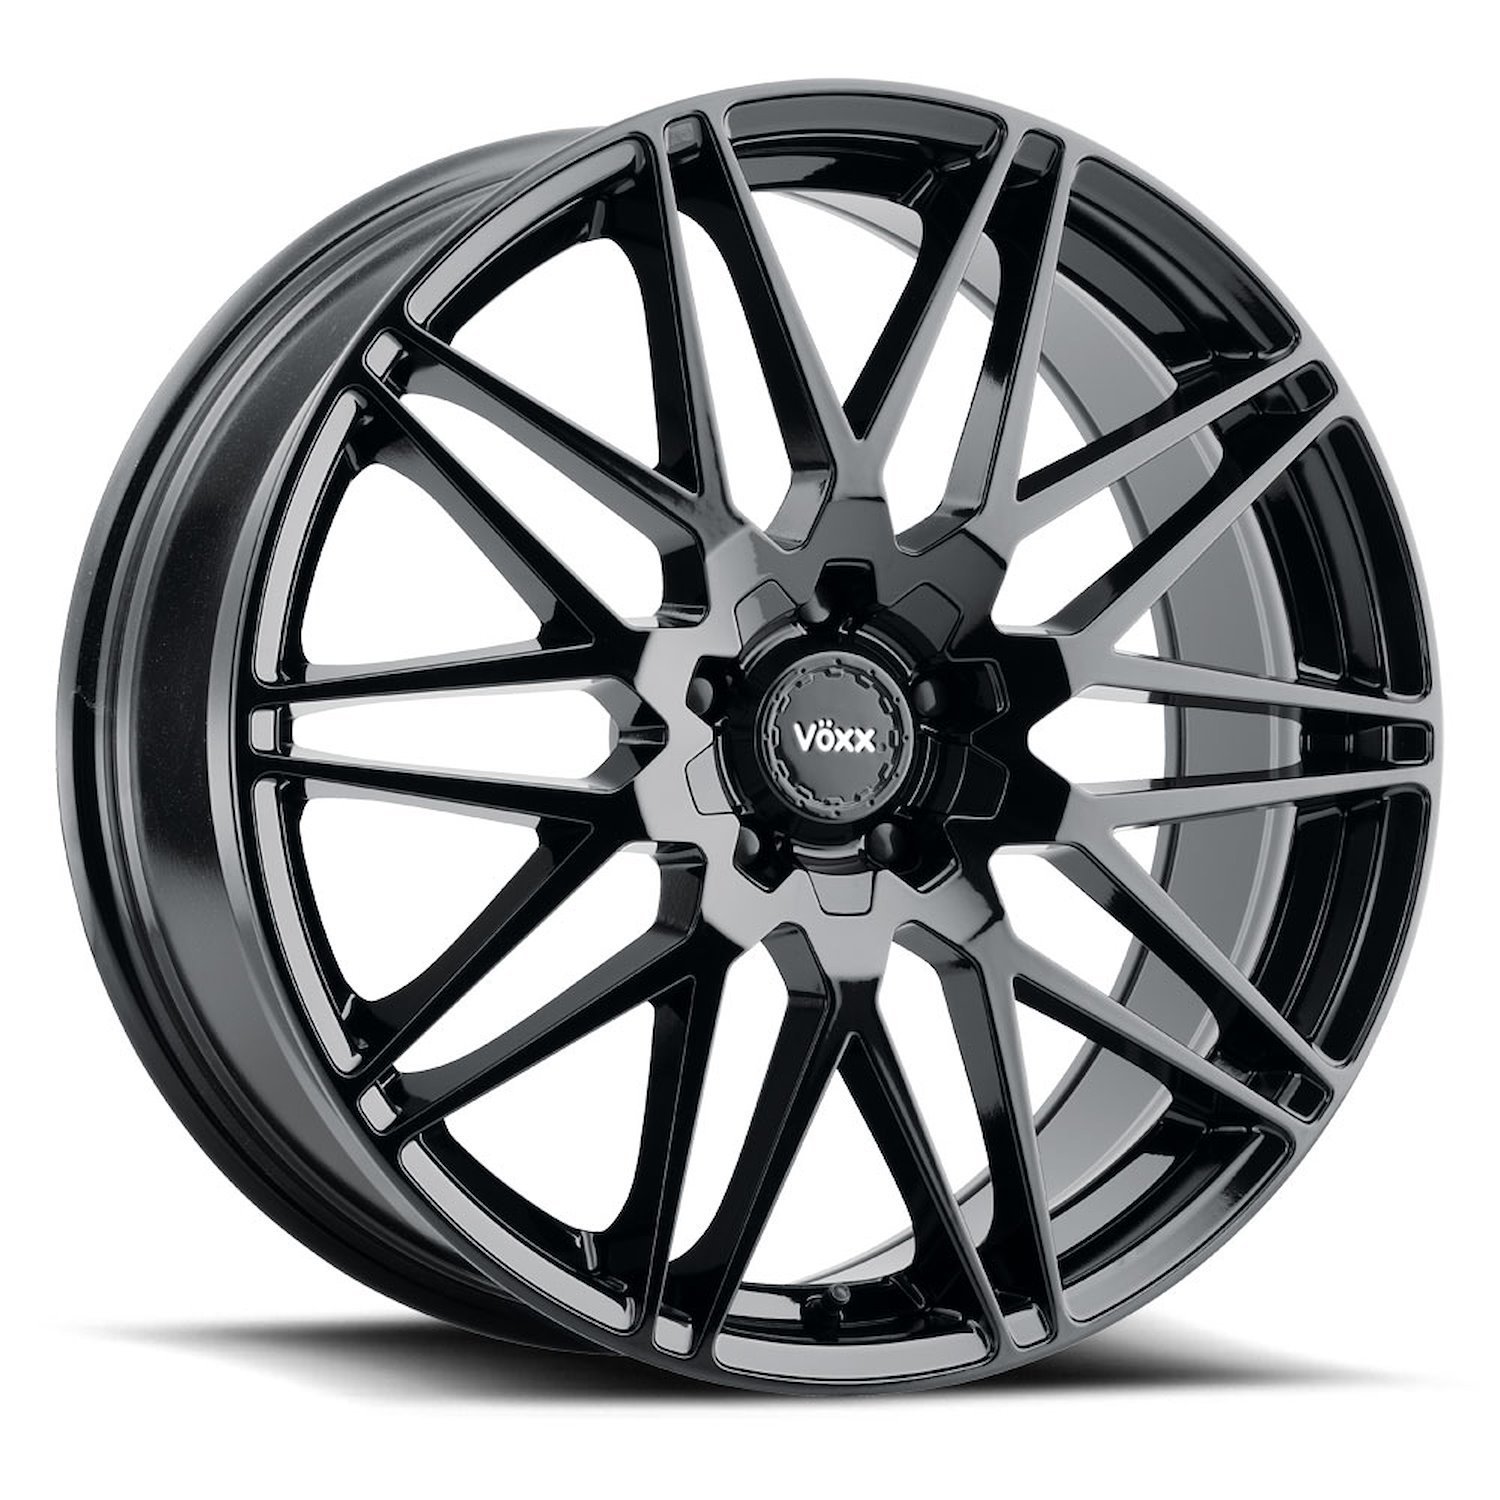 NCE 775-5003-40 GB Nice Wheel [Size: 17" x 7.50"] Finish: Gloss Black